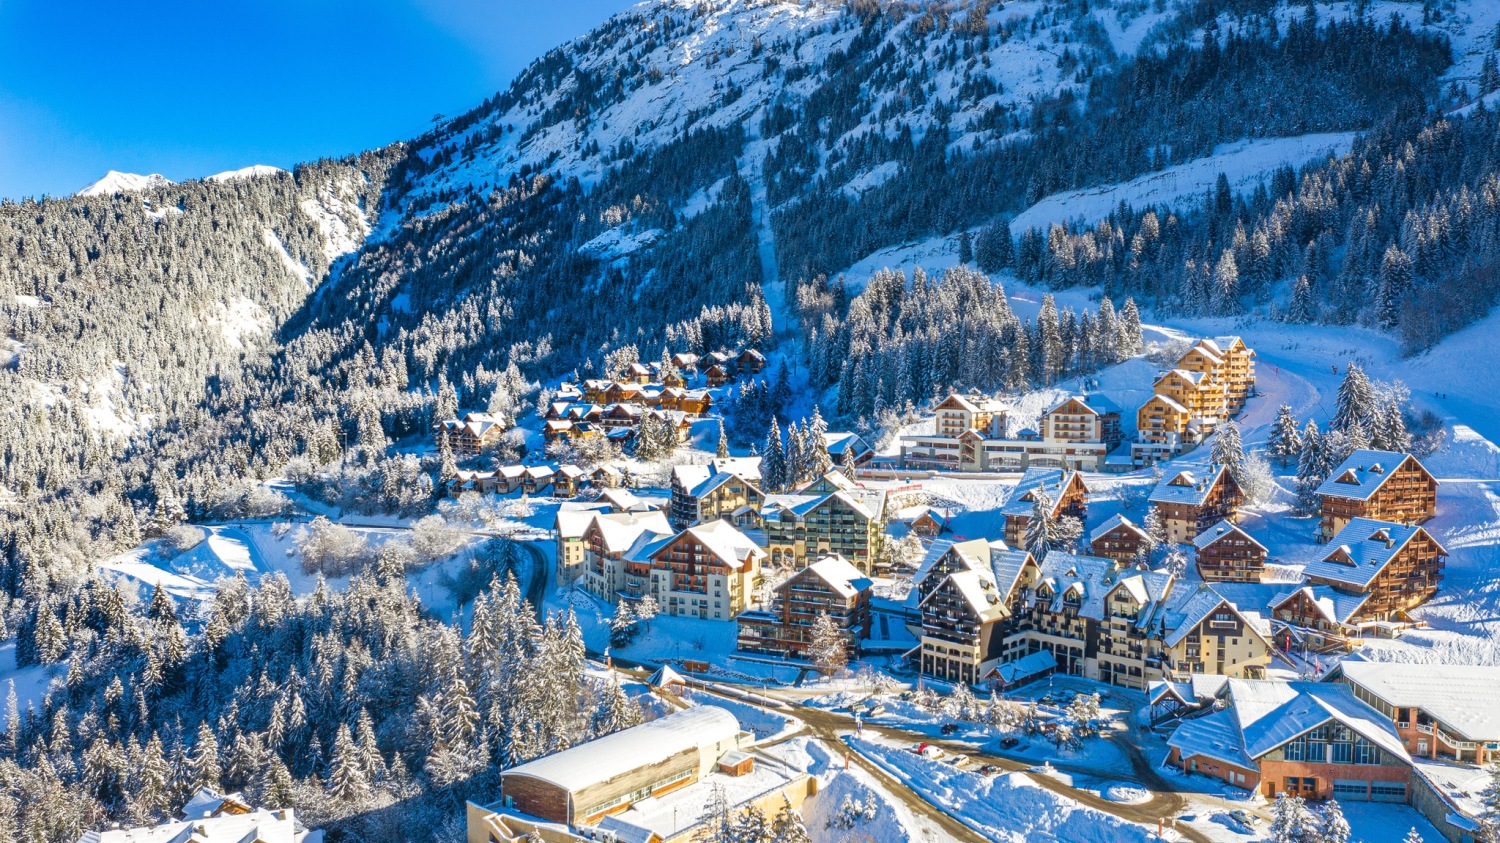 oz-3000-ski-resort-isere-france